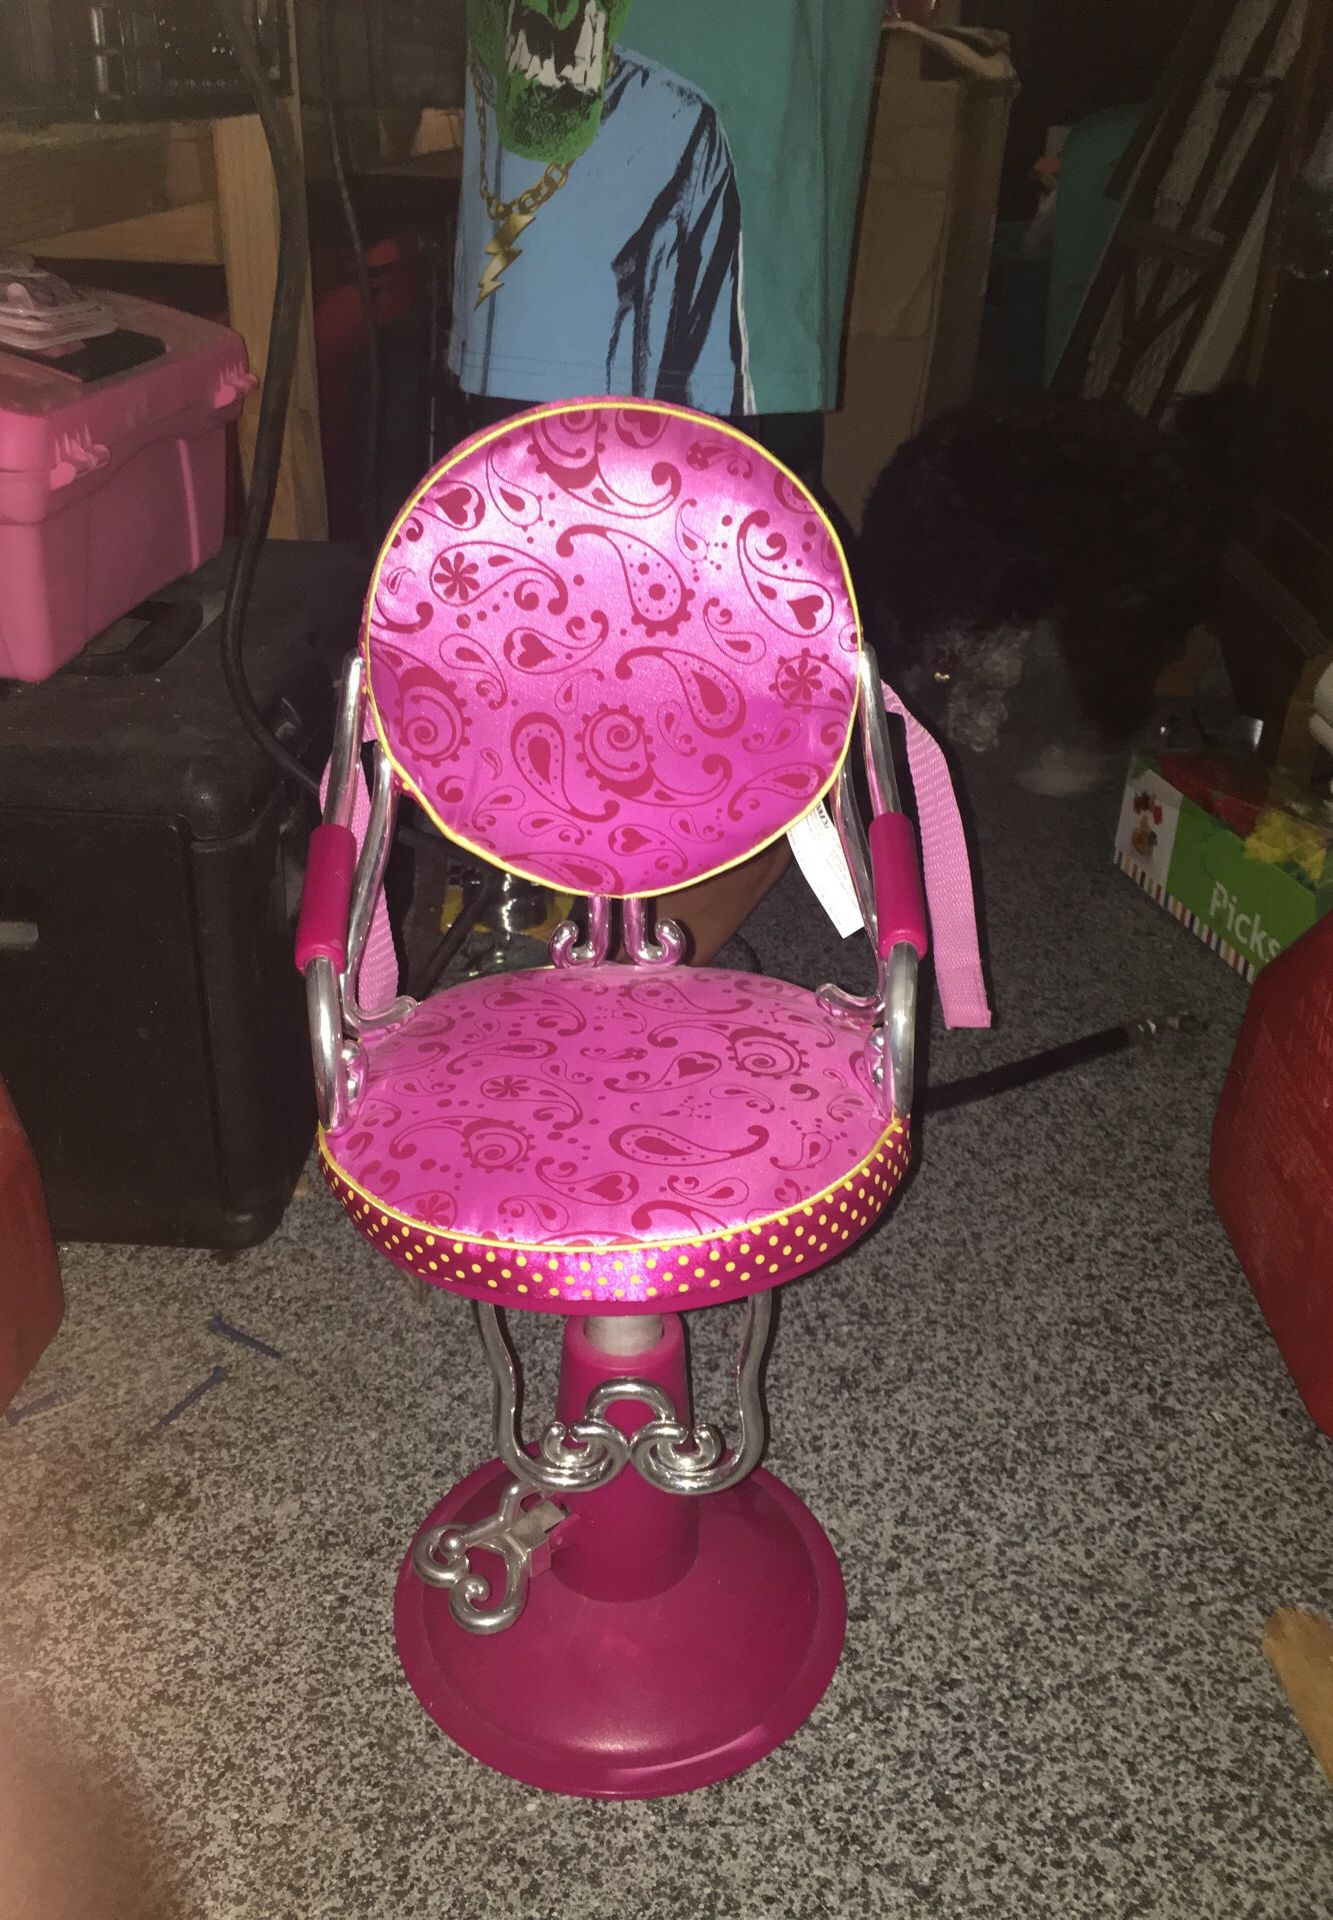 American girl doll hair style chair